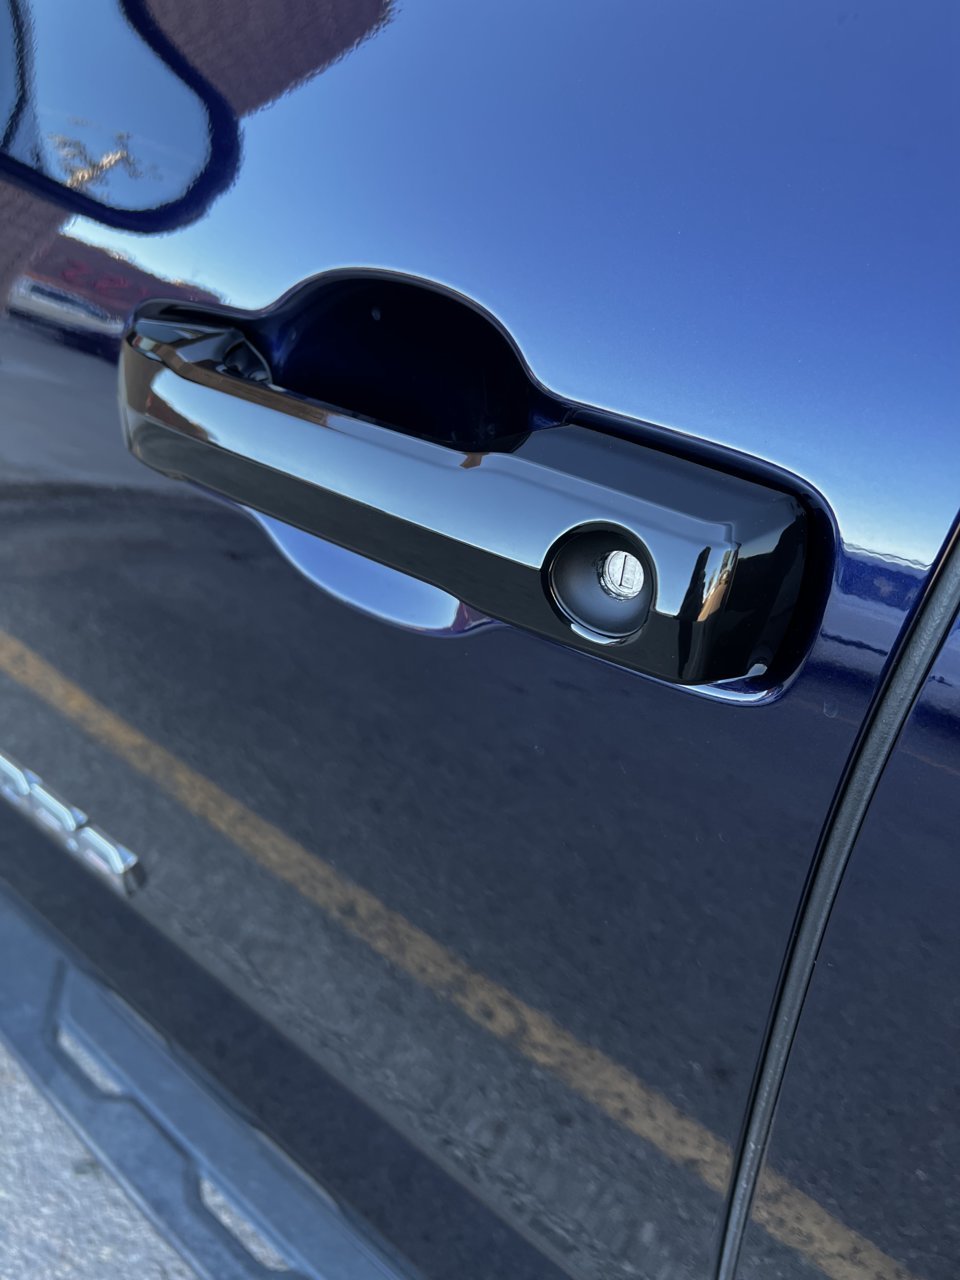 Door/window trim chrome delete | Page 3 | Toyota Tundra Forum